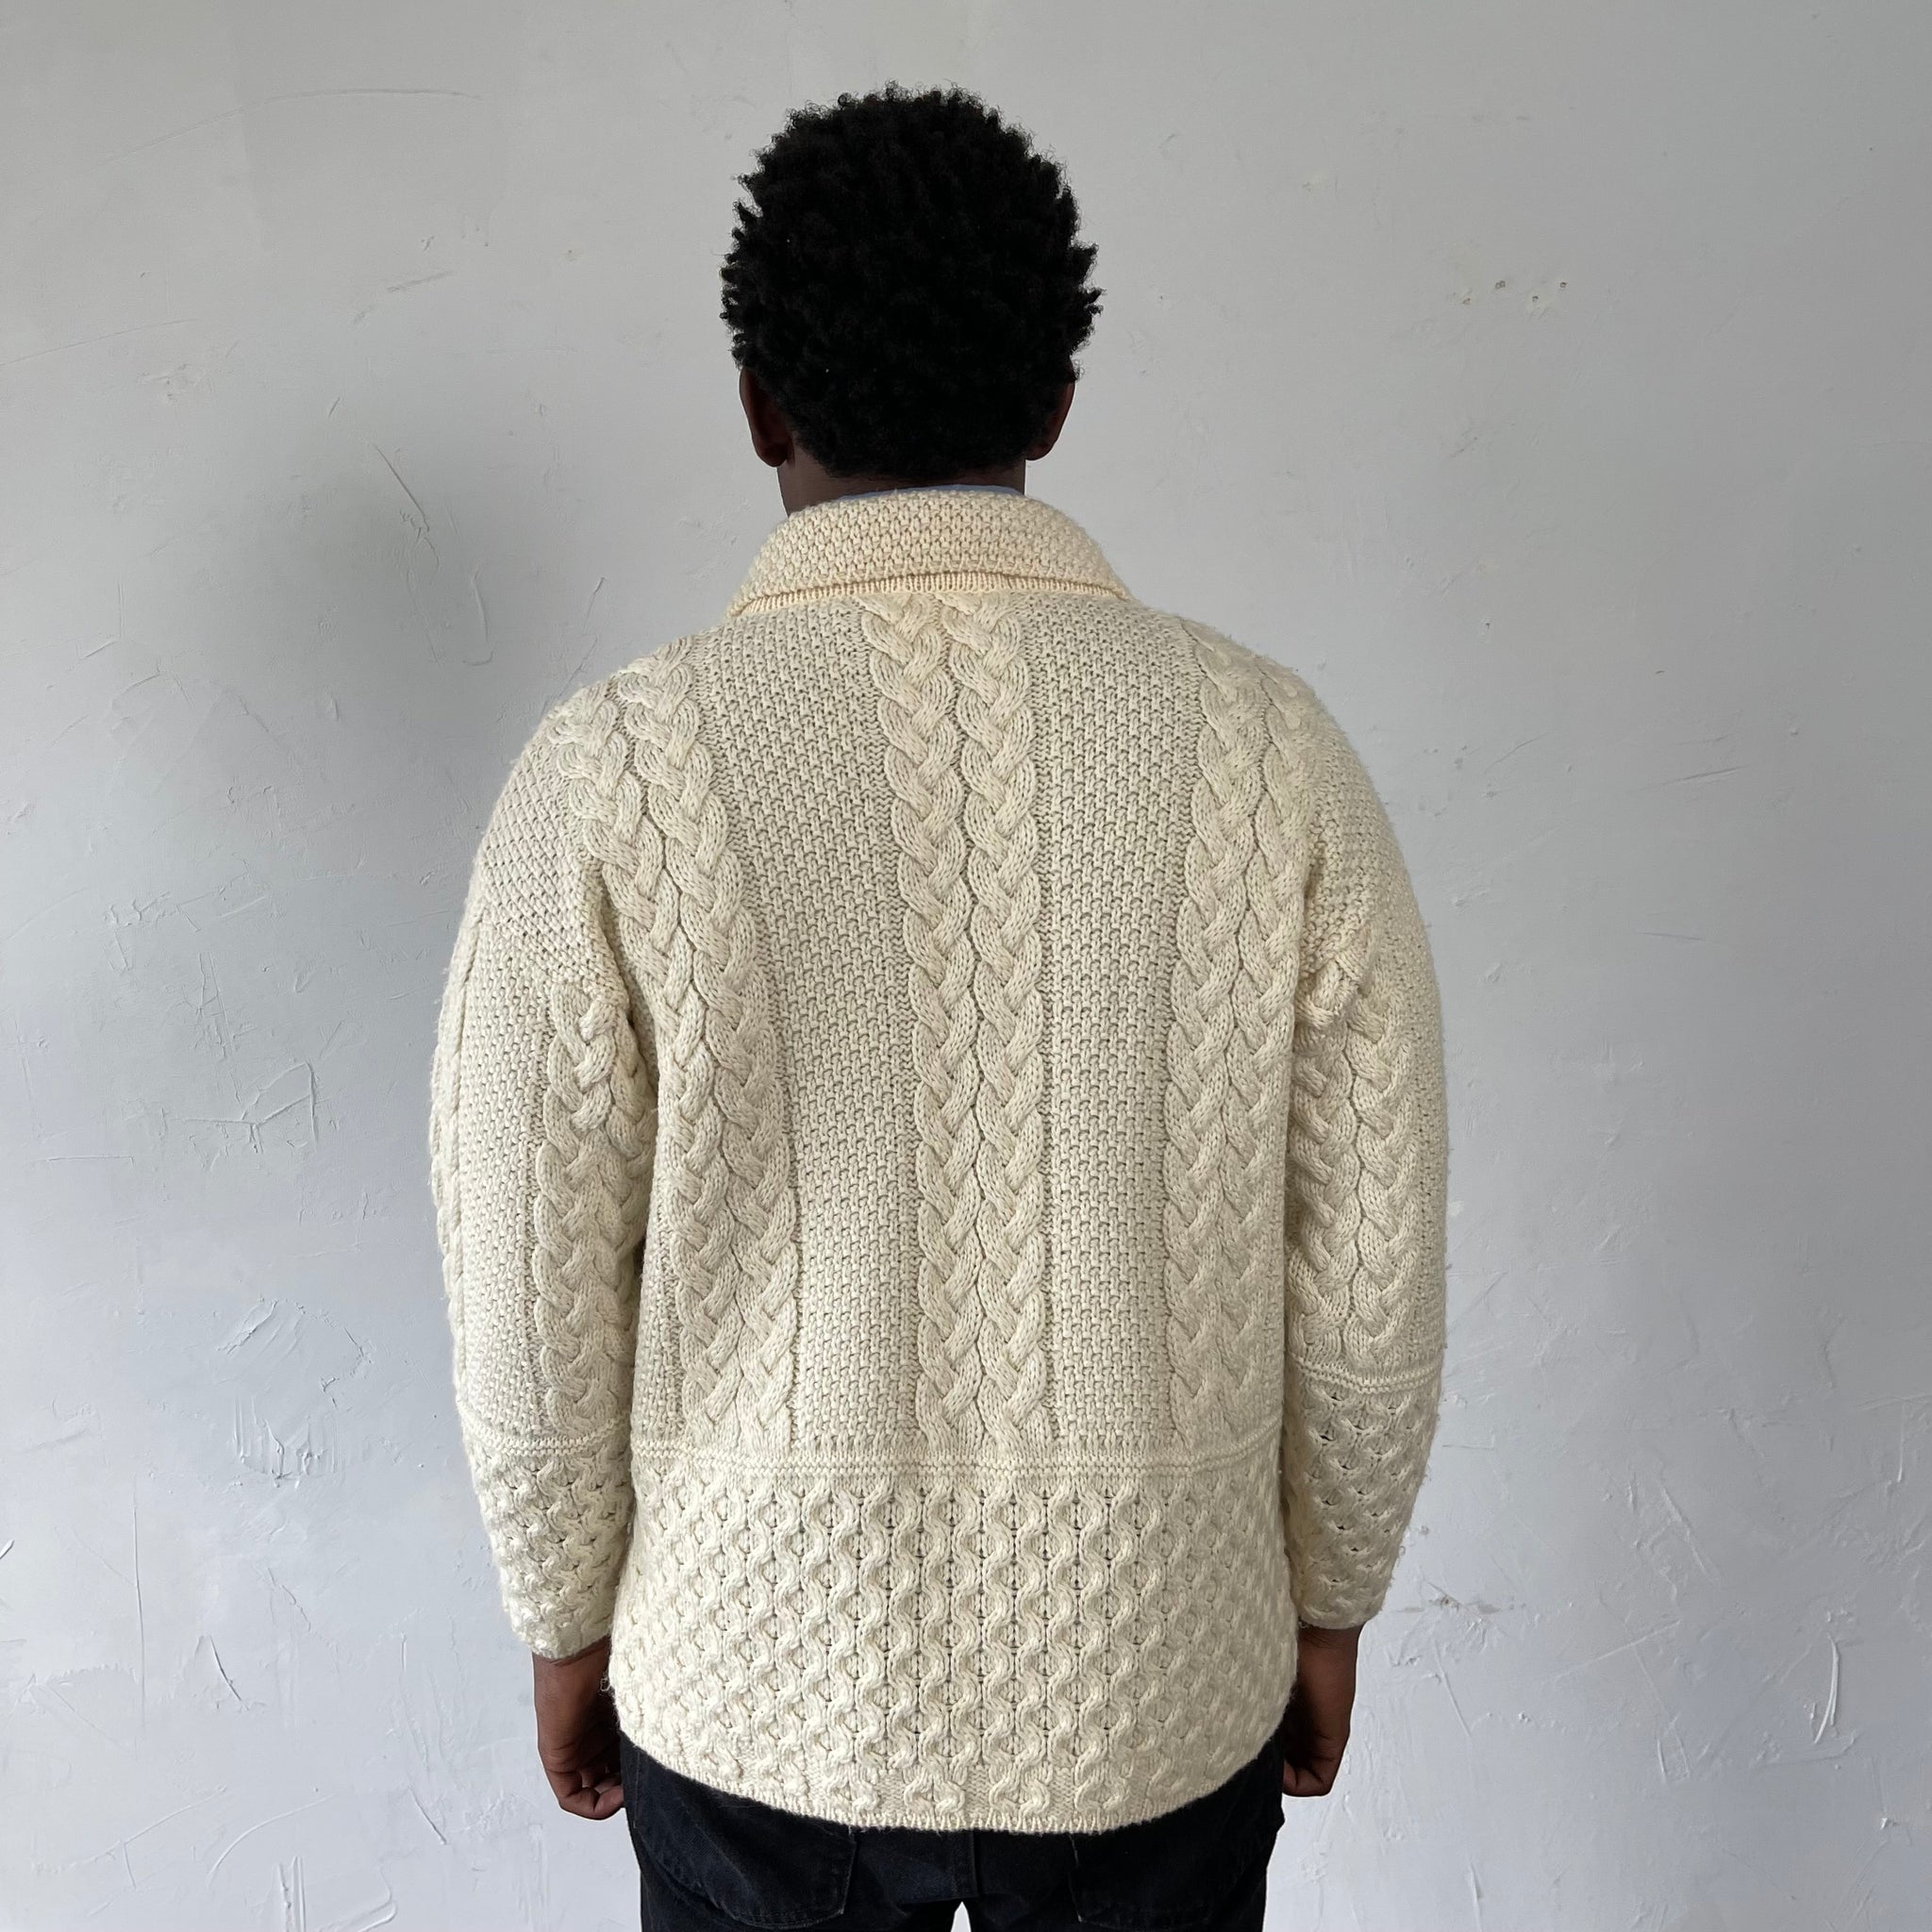 Glendalough Woolen Mills Sweater